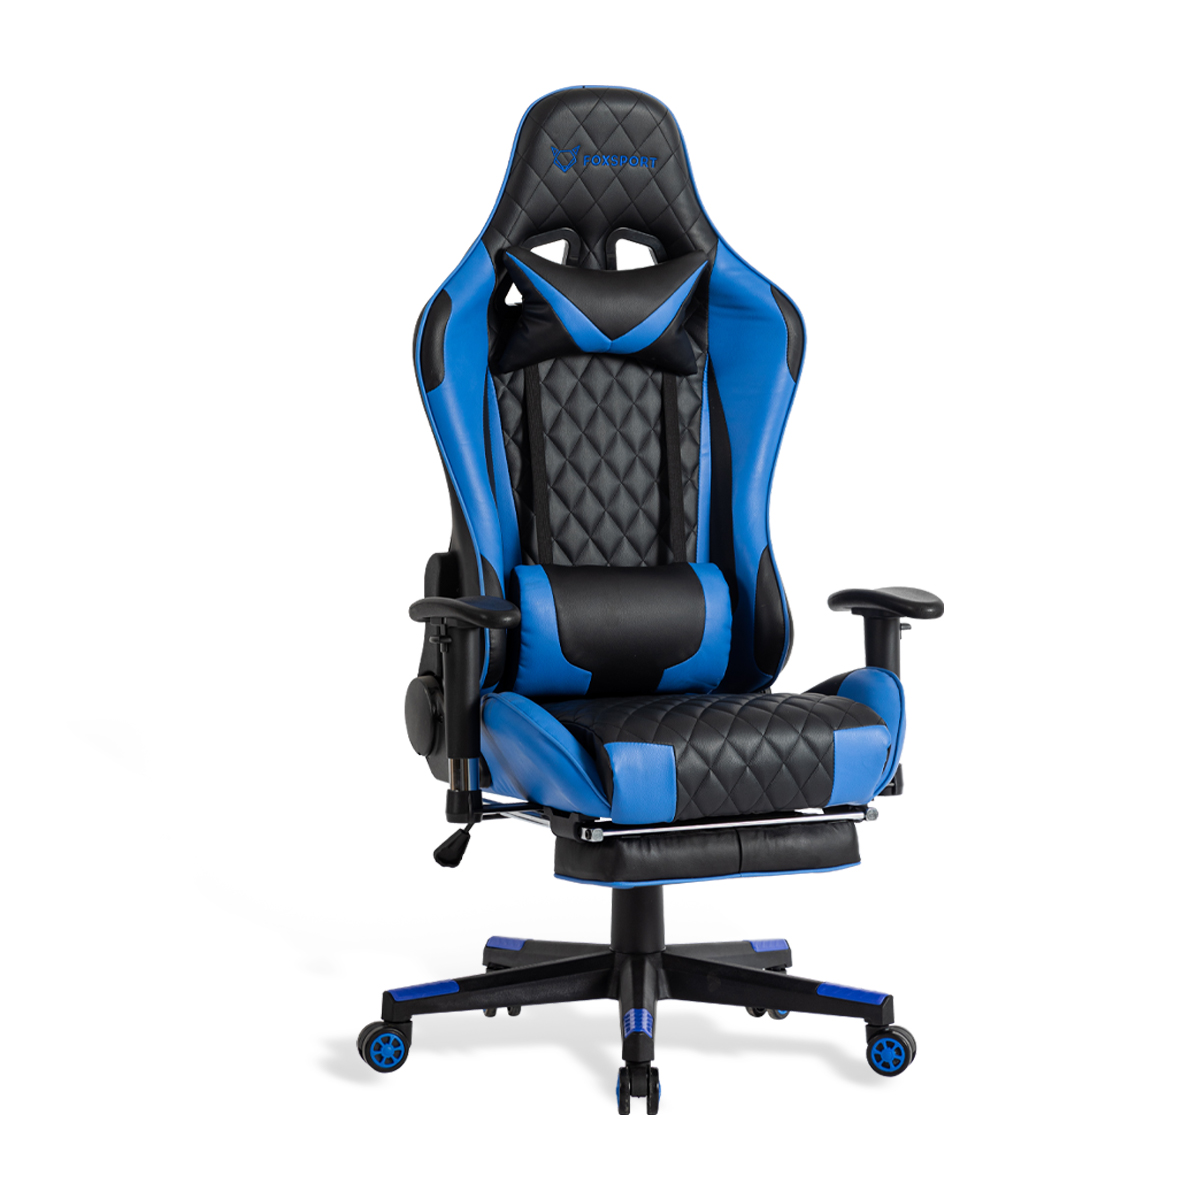 blau FOXSPORT Stuhl Beinstütze Gaming-Stuhl, Blau Gaming mit